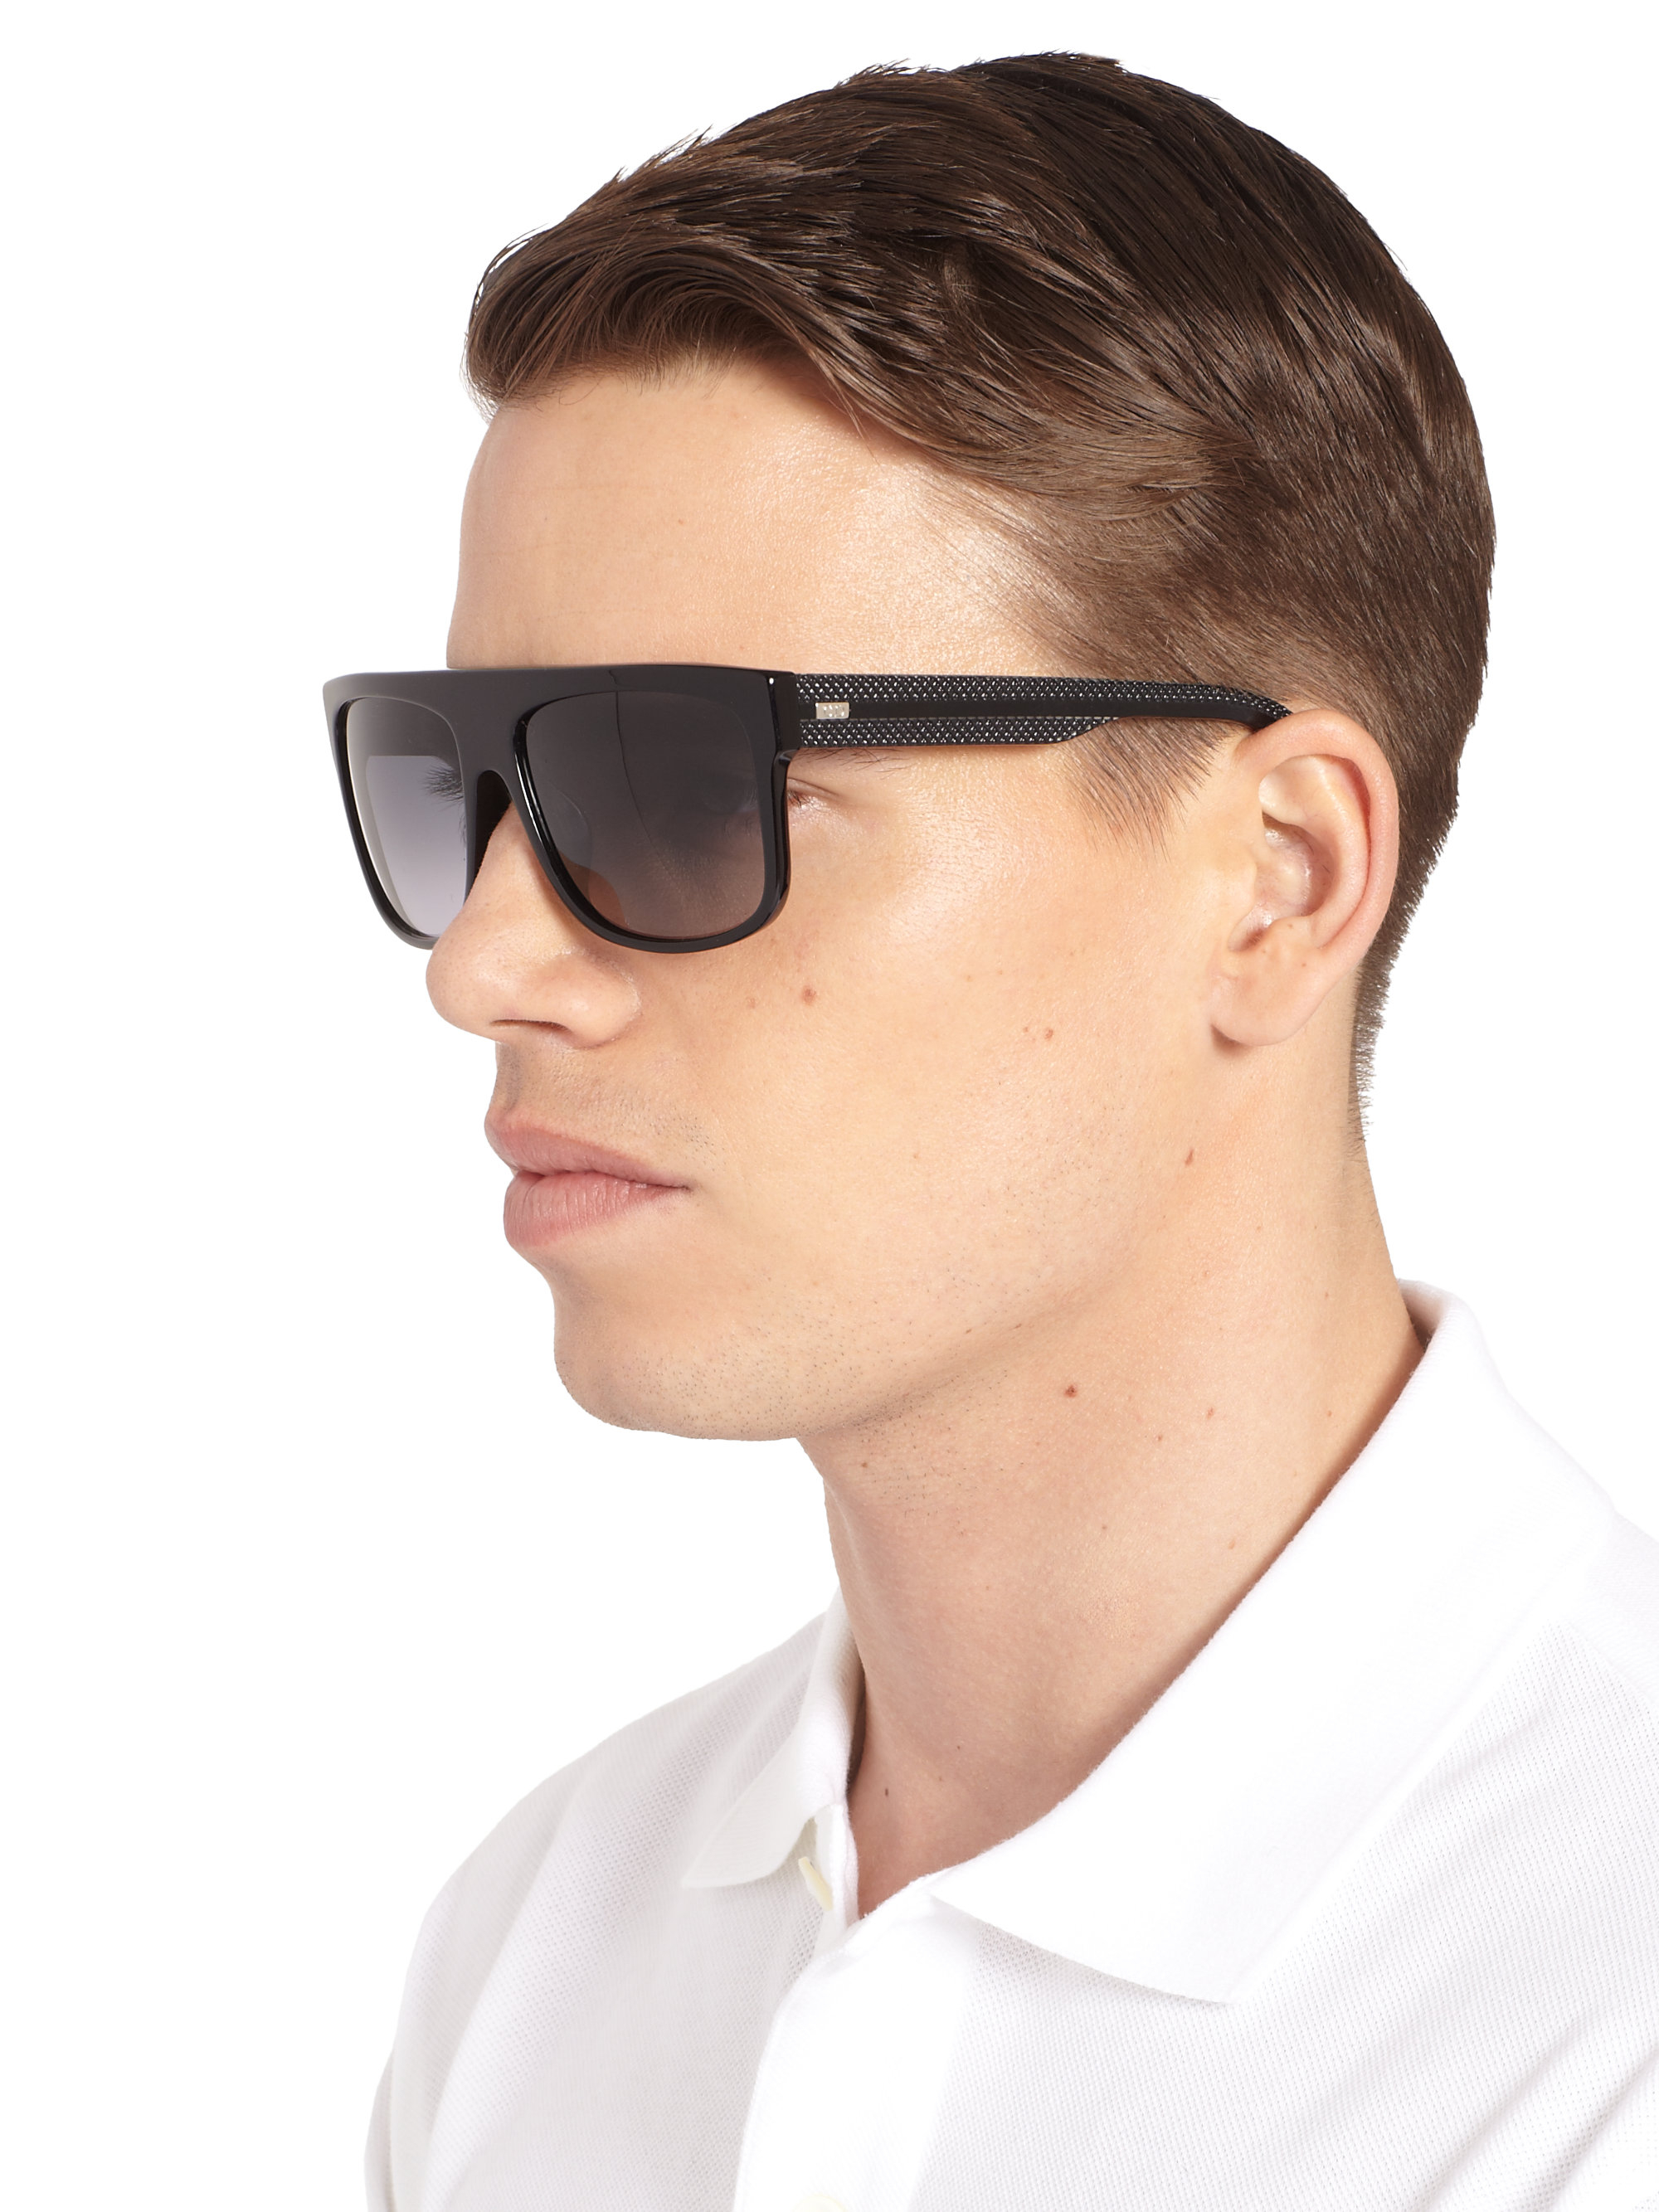 Lyst - Dior Homme Polarized Sunglasses in Black for Men